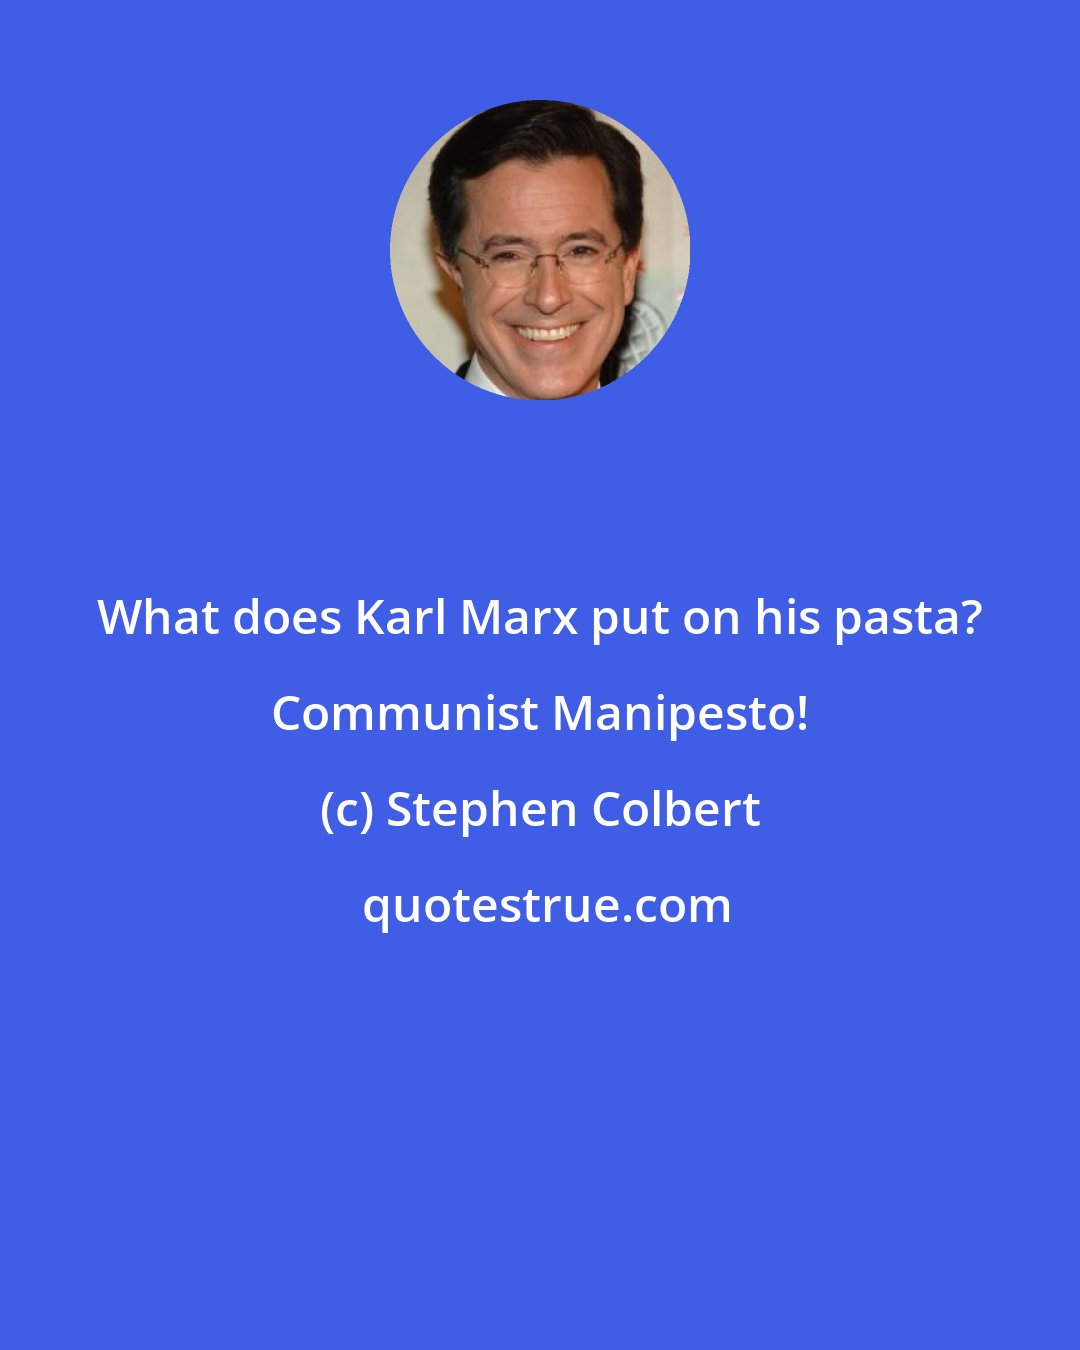 Stephen Colbert: What does Karl Marx put on his pasta? Communist Manipesto!